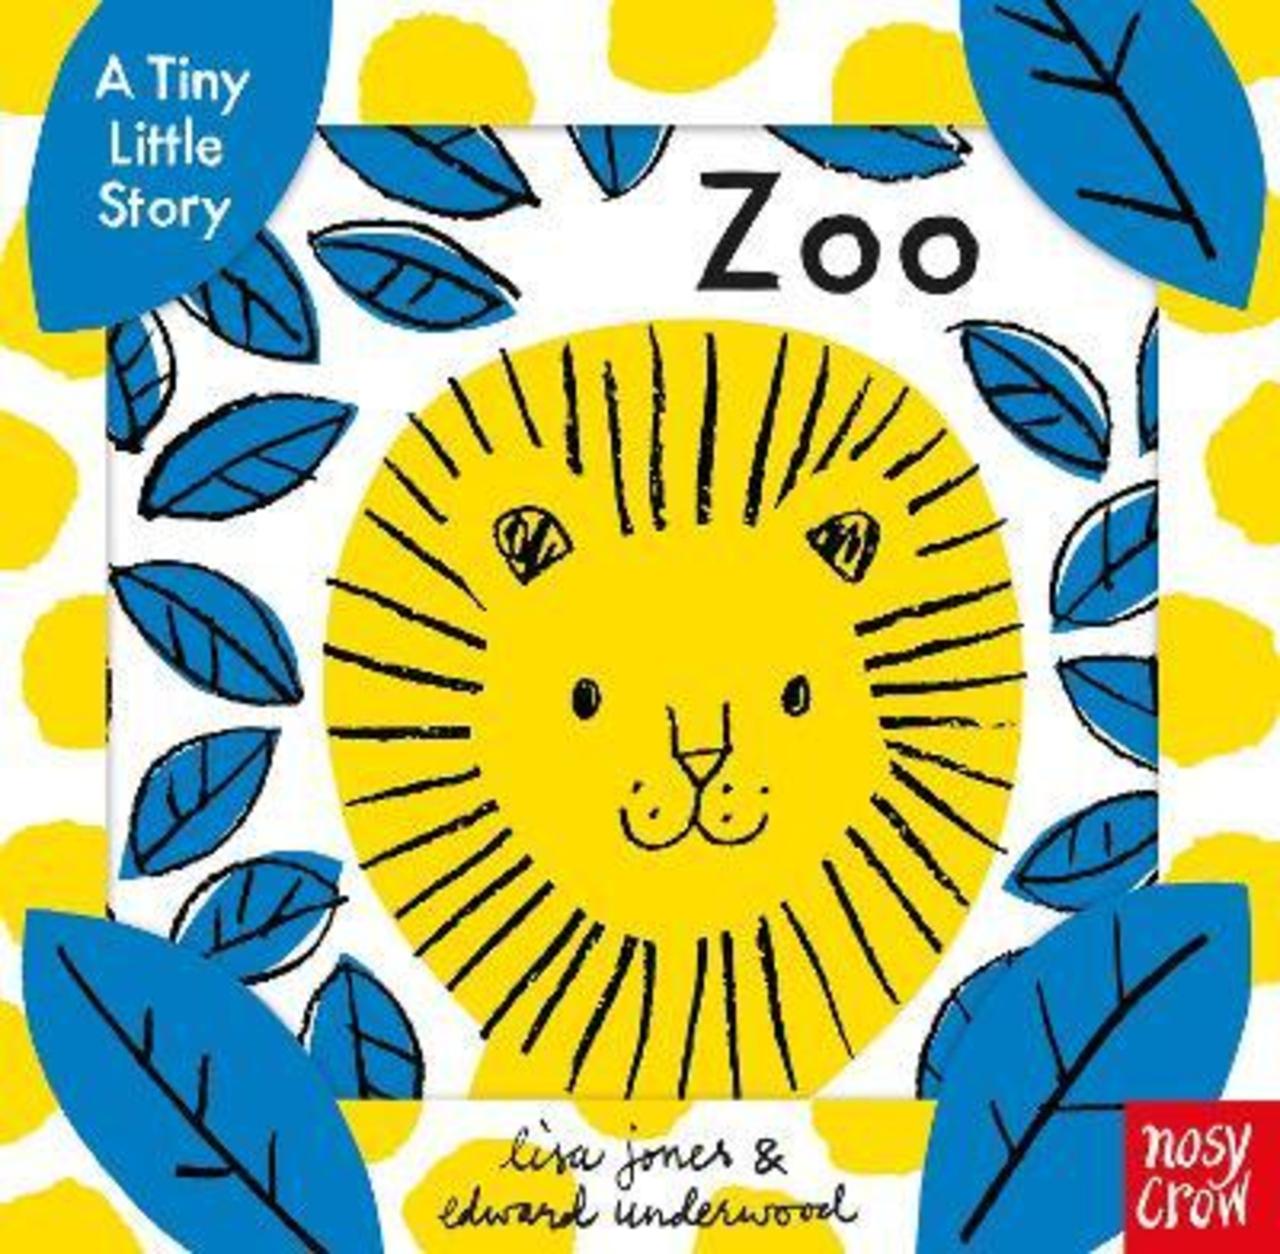 Sách - A Tiny Little Story: Zoo by Lisa Jones (UK edition, hardcover)